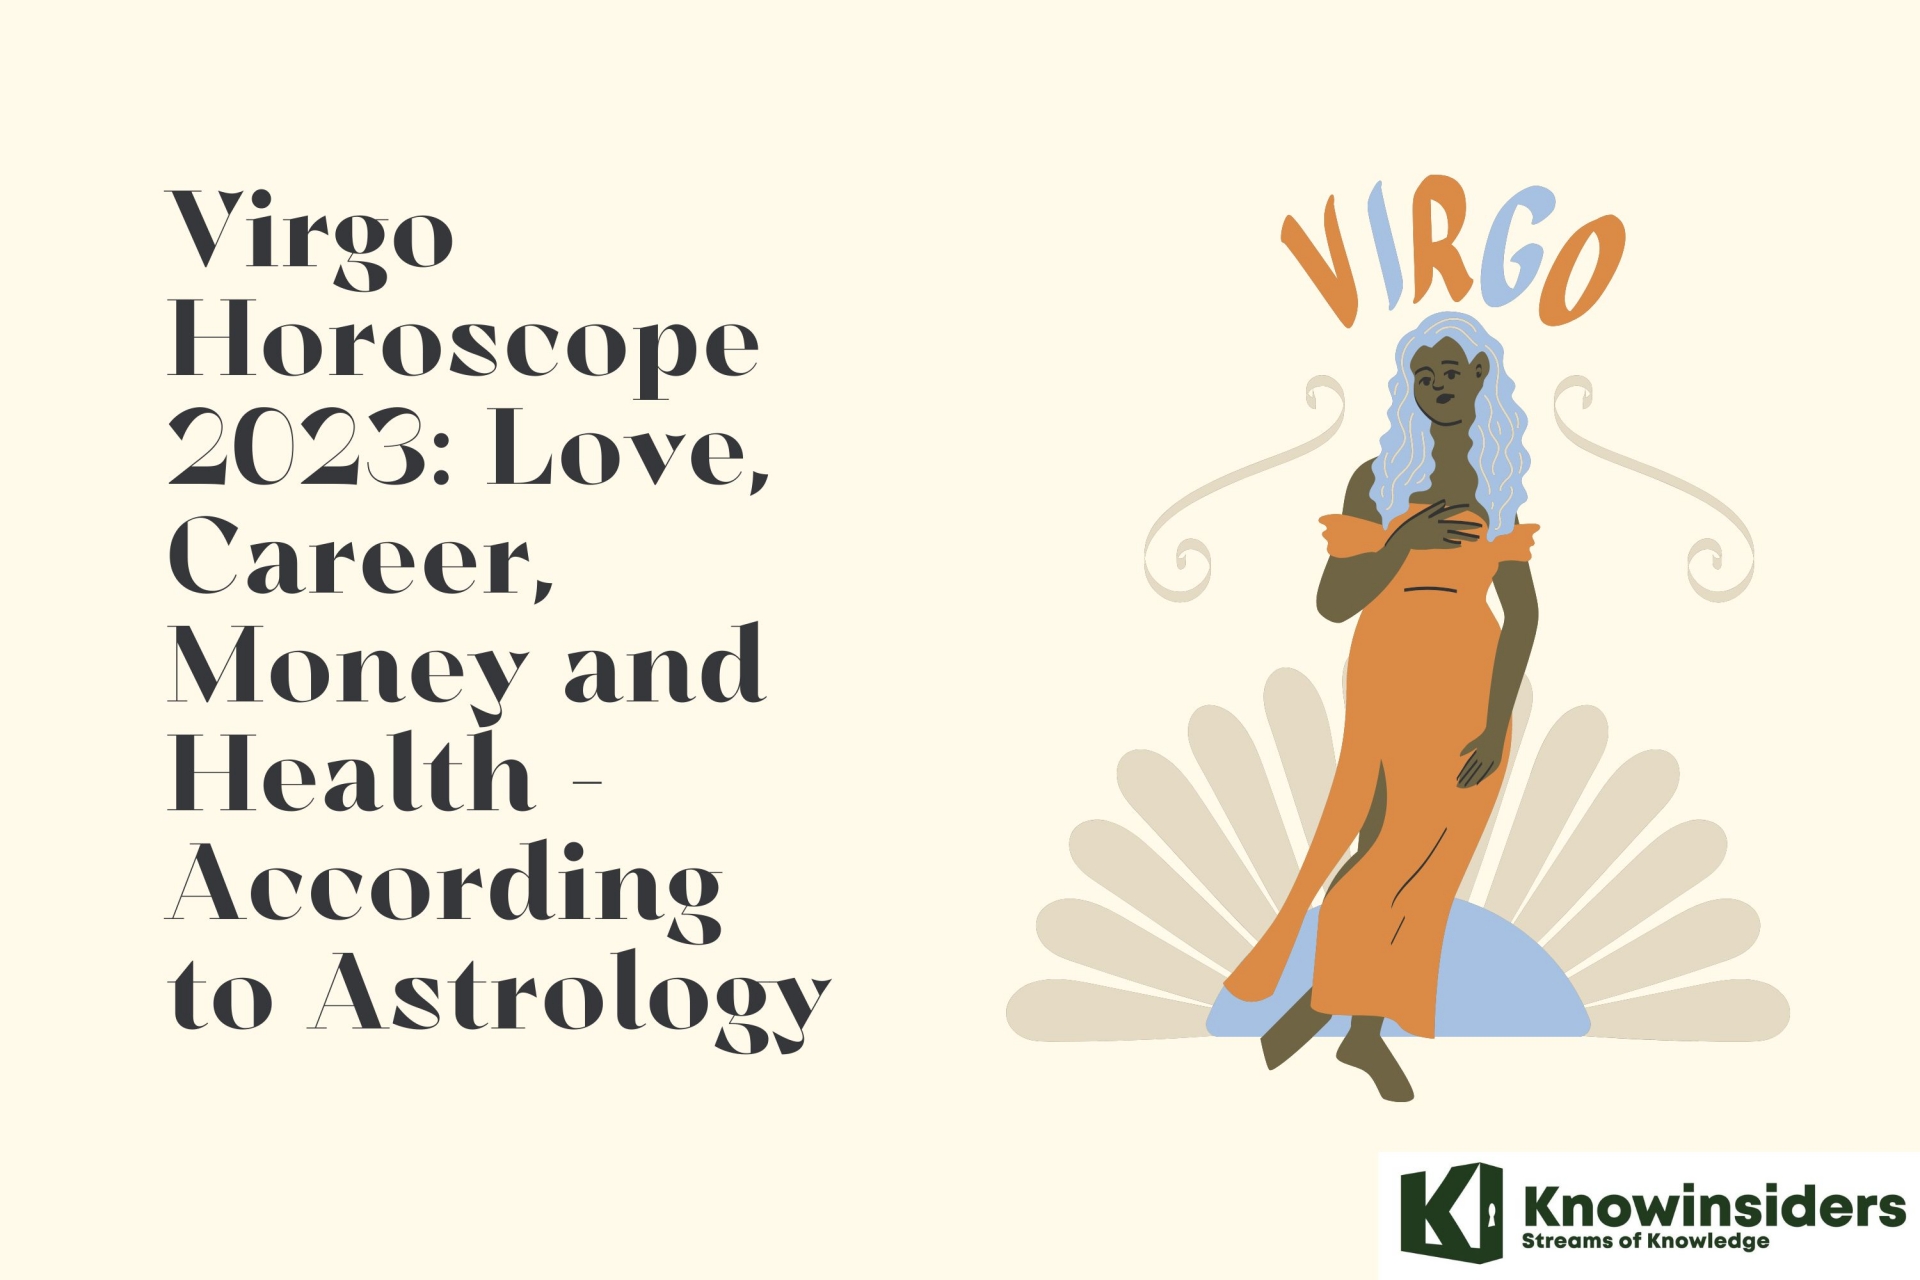 Virgo Horoscope 2023: Love, Career, Money and Health - According to Astrology